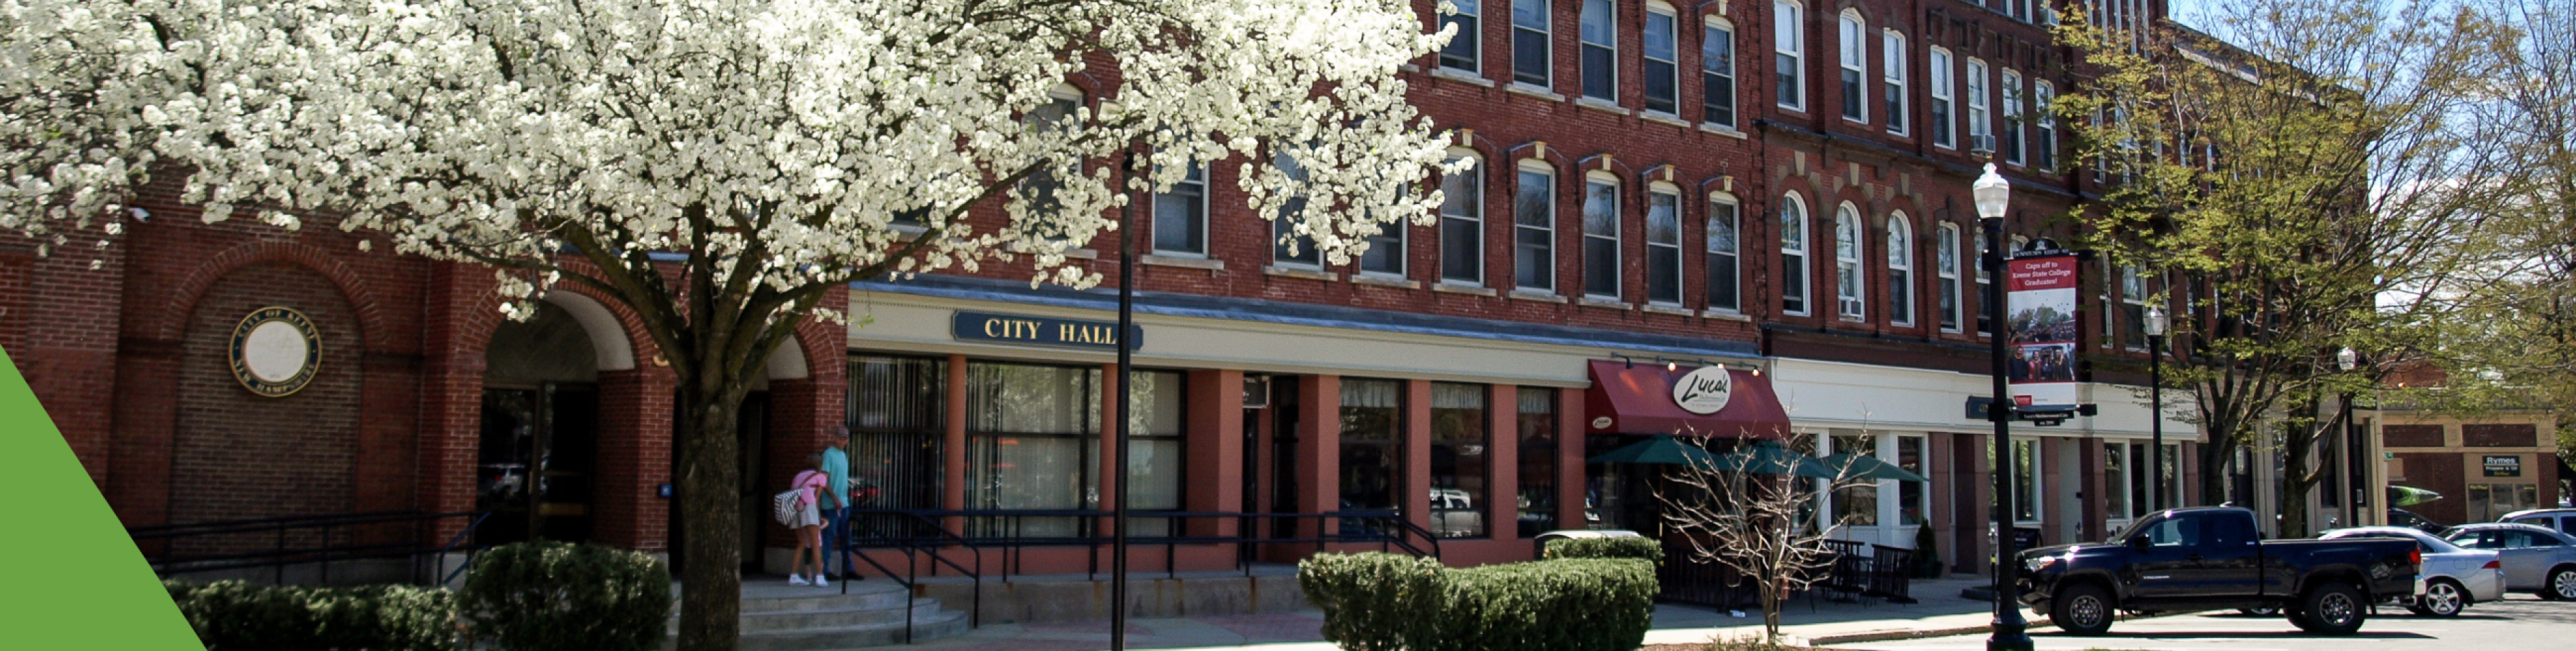 City Hall Photo